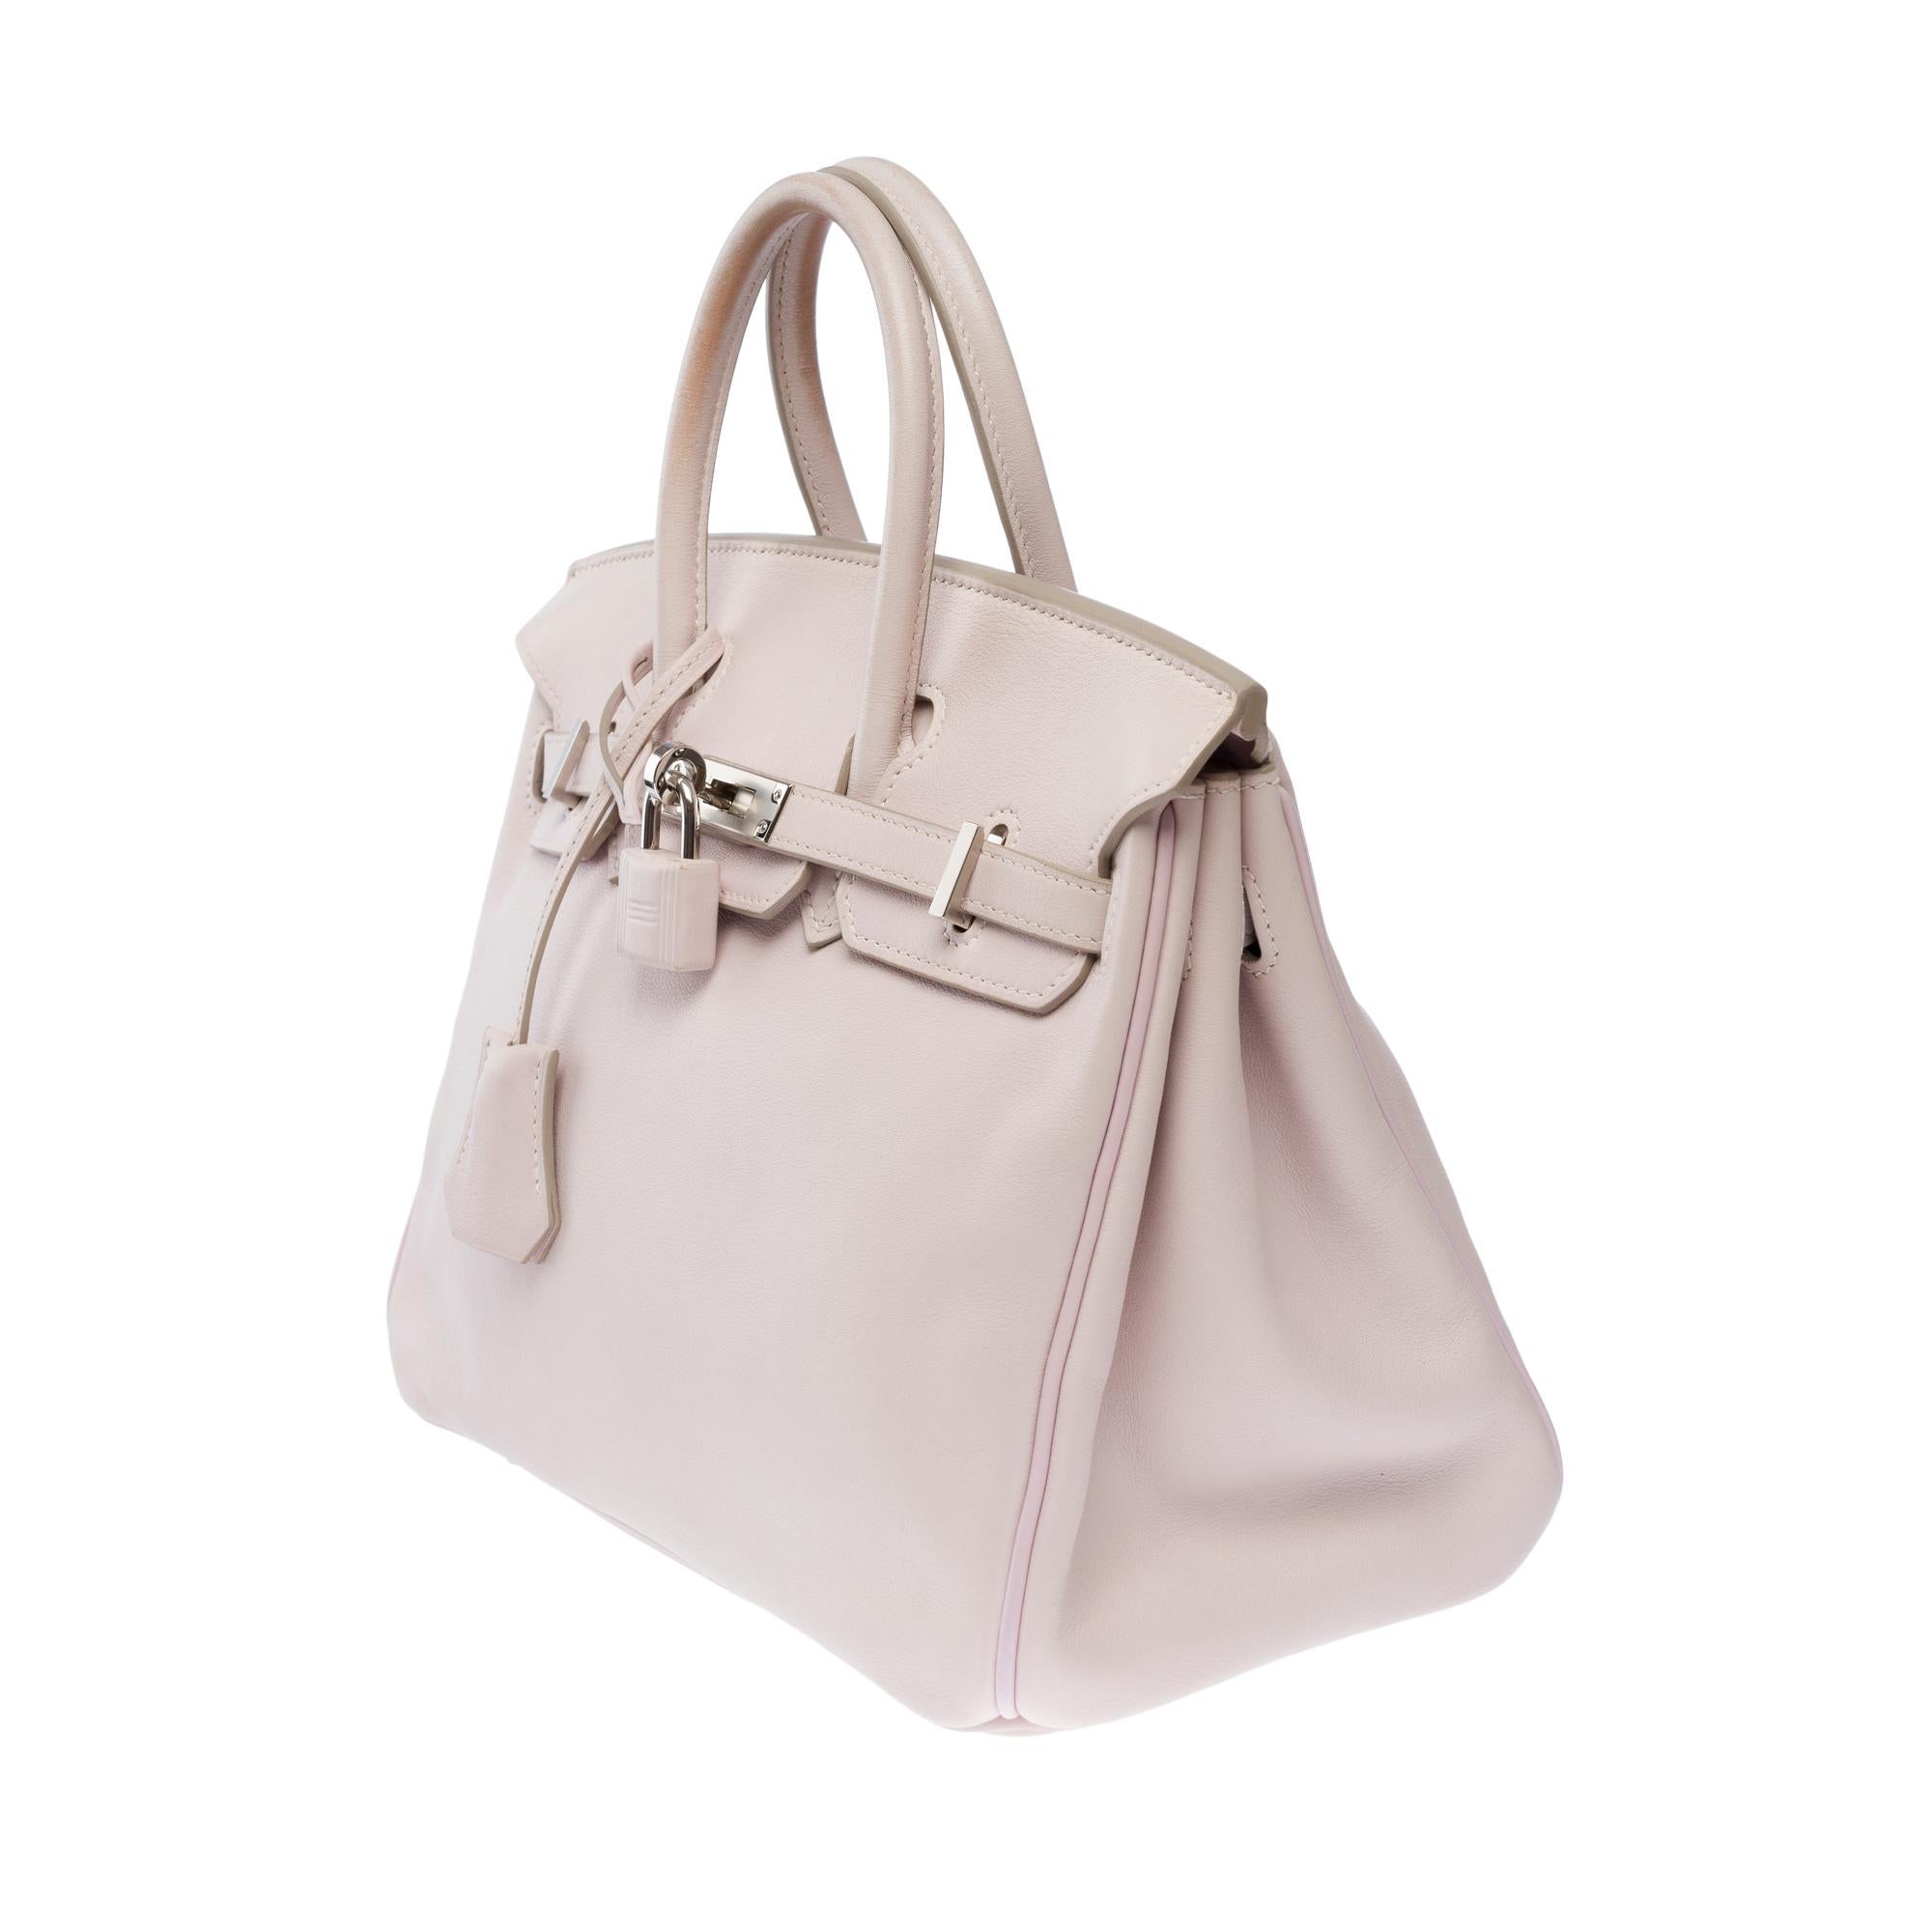 Amazing Hermes Birkin 25cm handbag in Rose Dragee Swift Calf leather, SHW For Sale 1